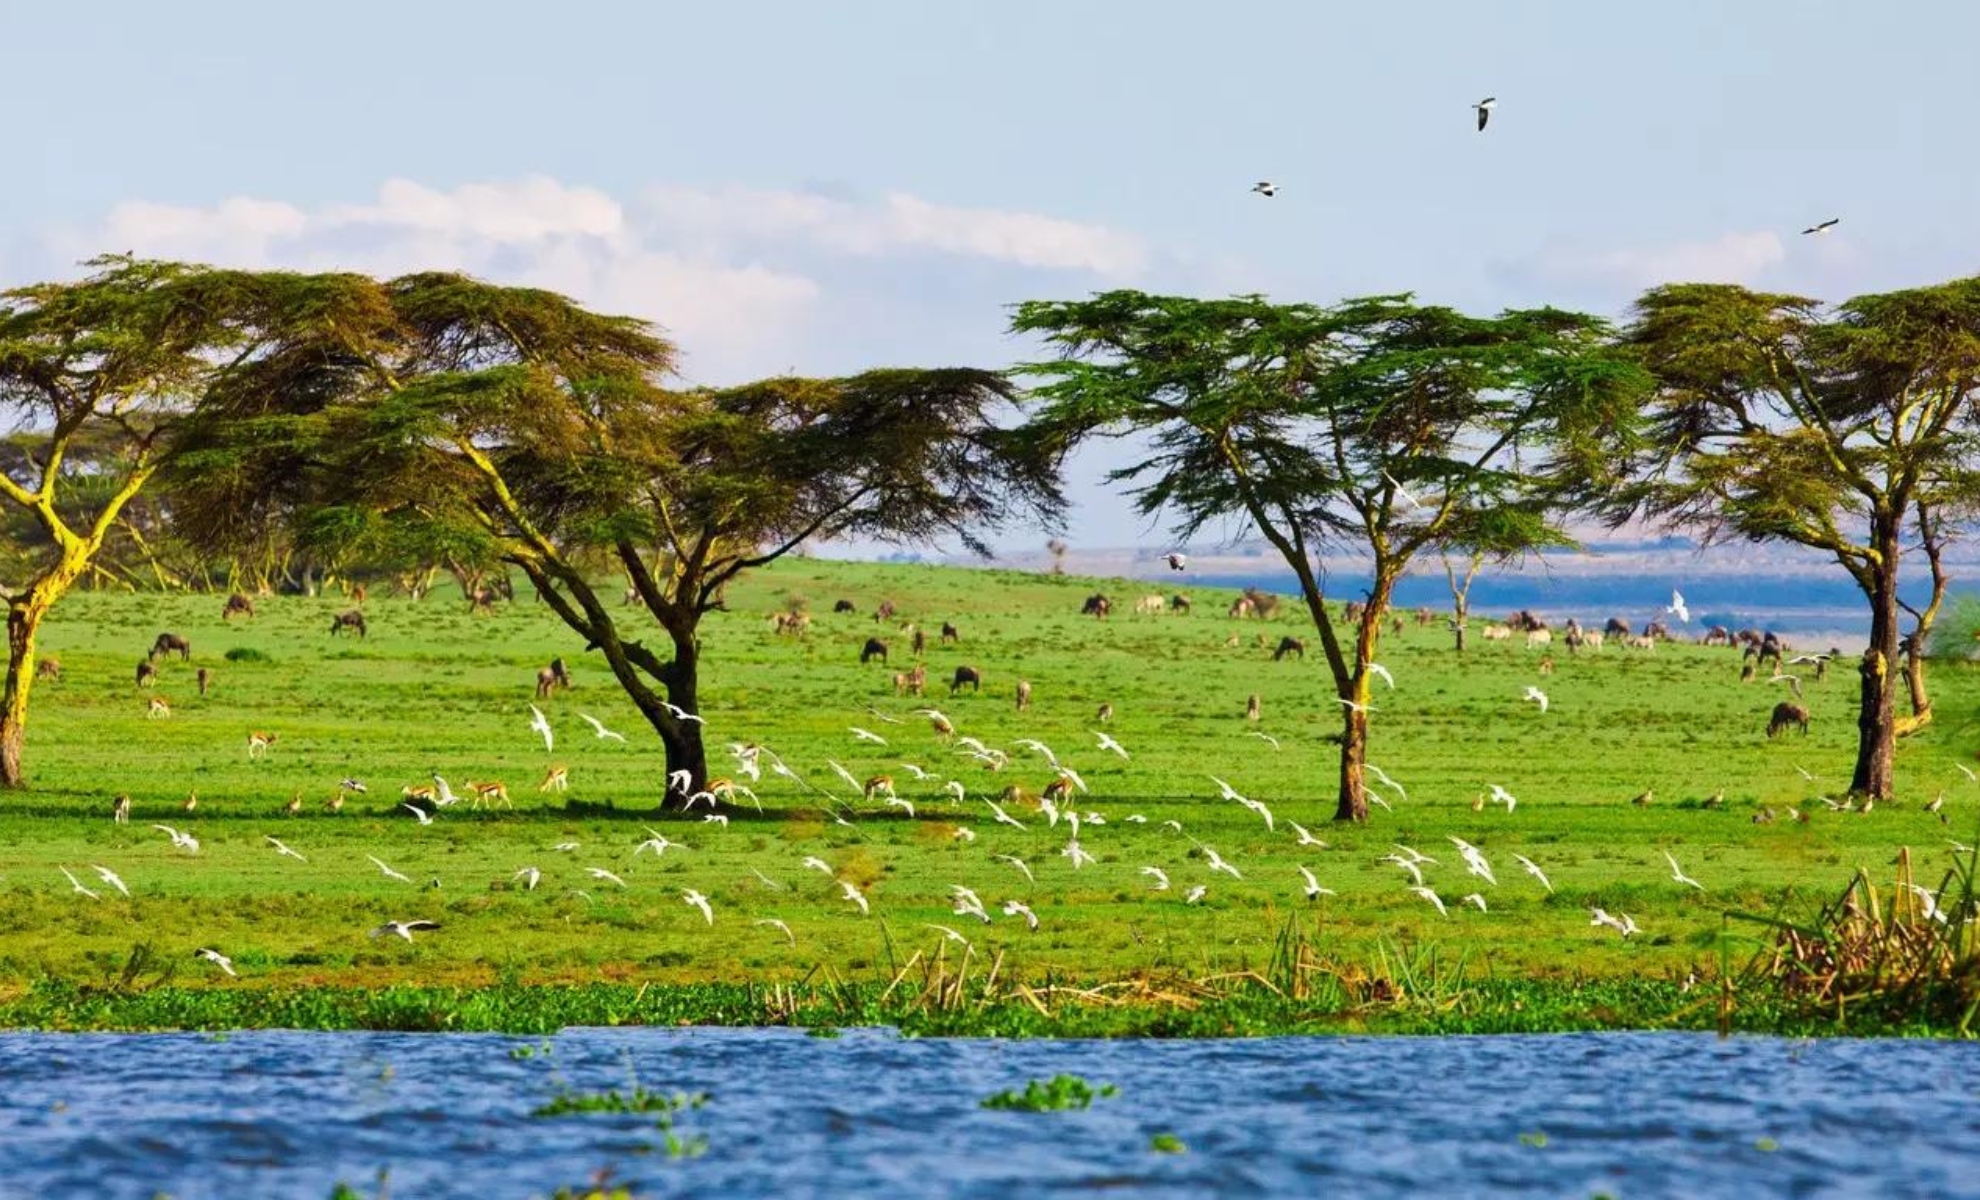 Le lac d’eau douce Naivasha au Kenya